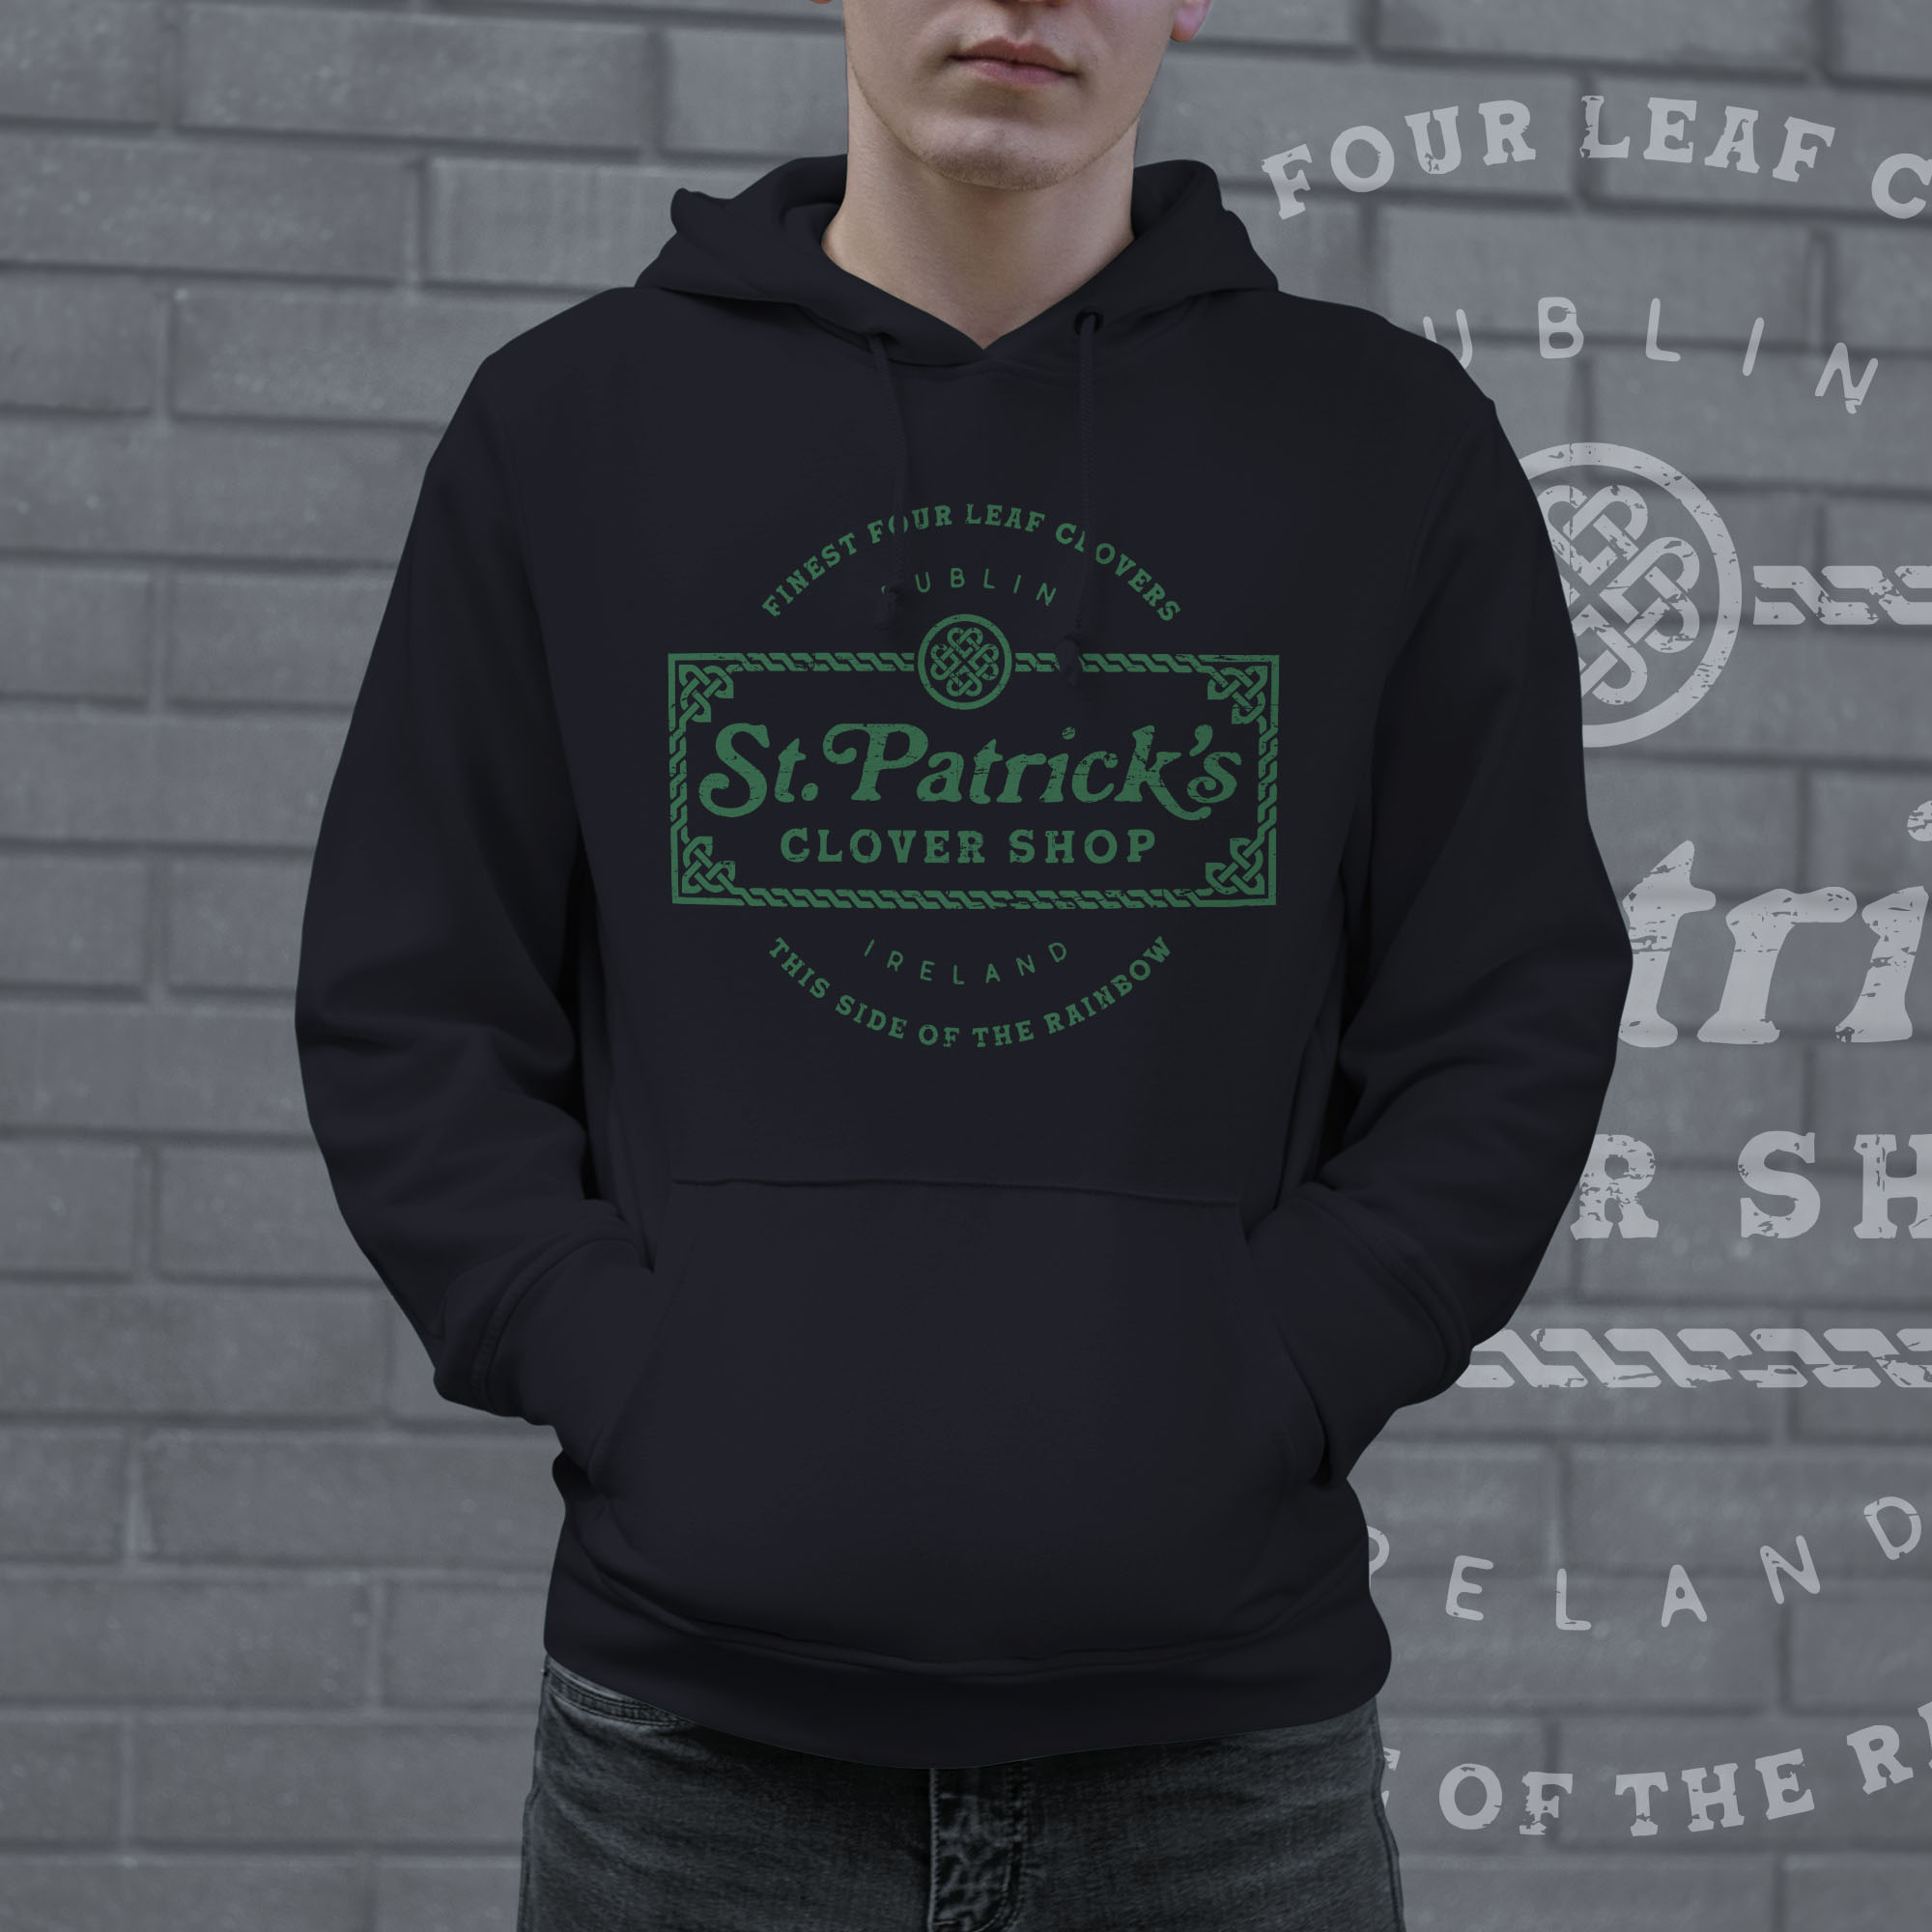 Crazy Dog Tshirts St Patricks Clover Shop Hoodie Funny Vintage St Patricks Day Parade Outfit Cool Shamrock Design